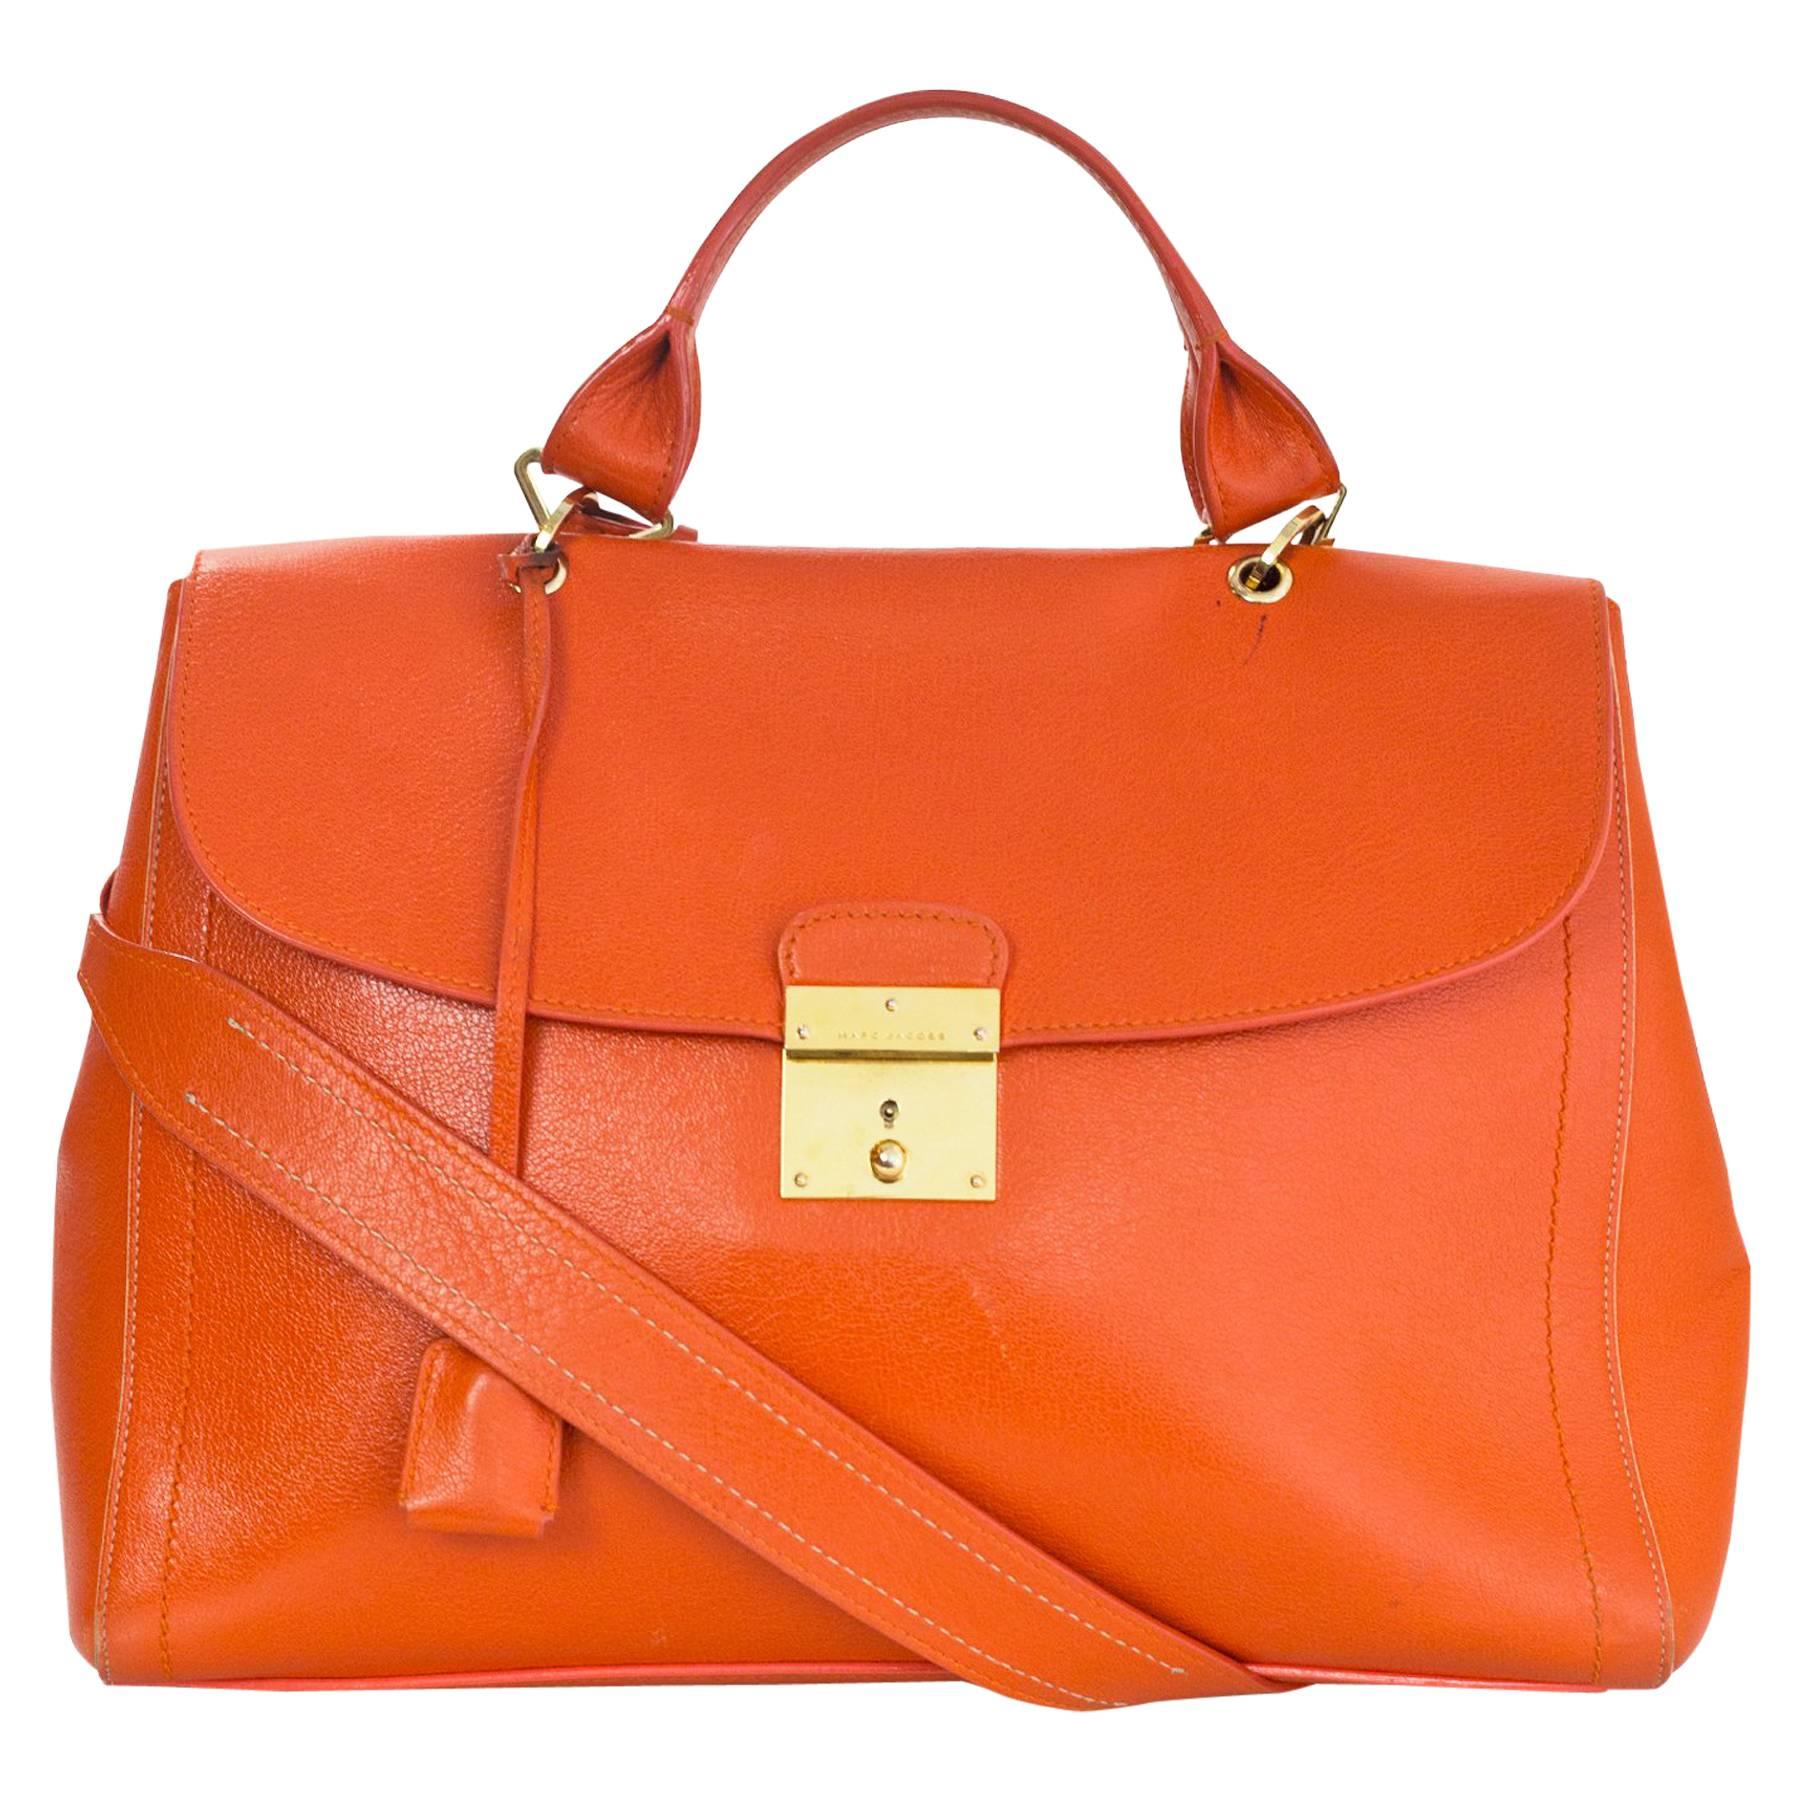 Marc Jacobs Orange Leather 1984 Satchel Bag